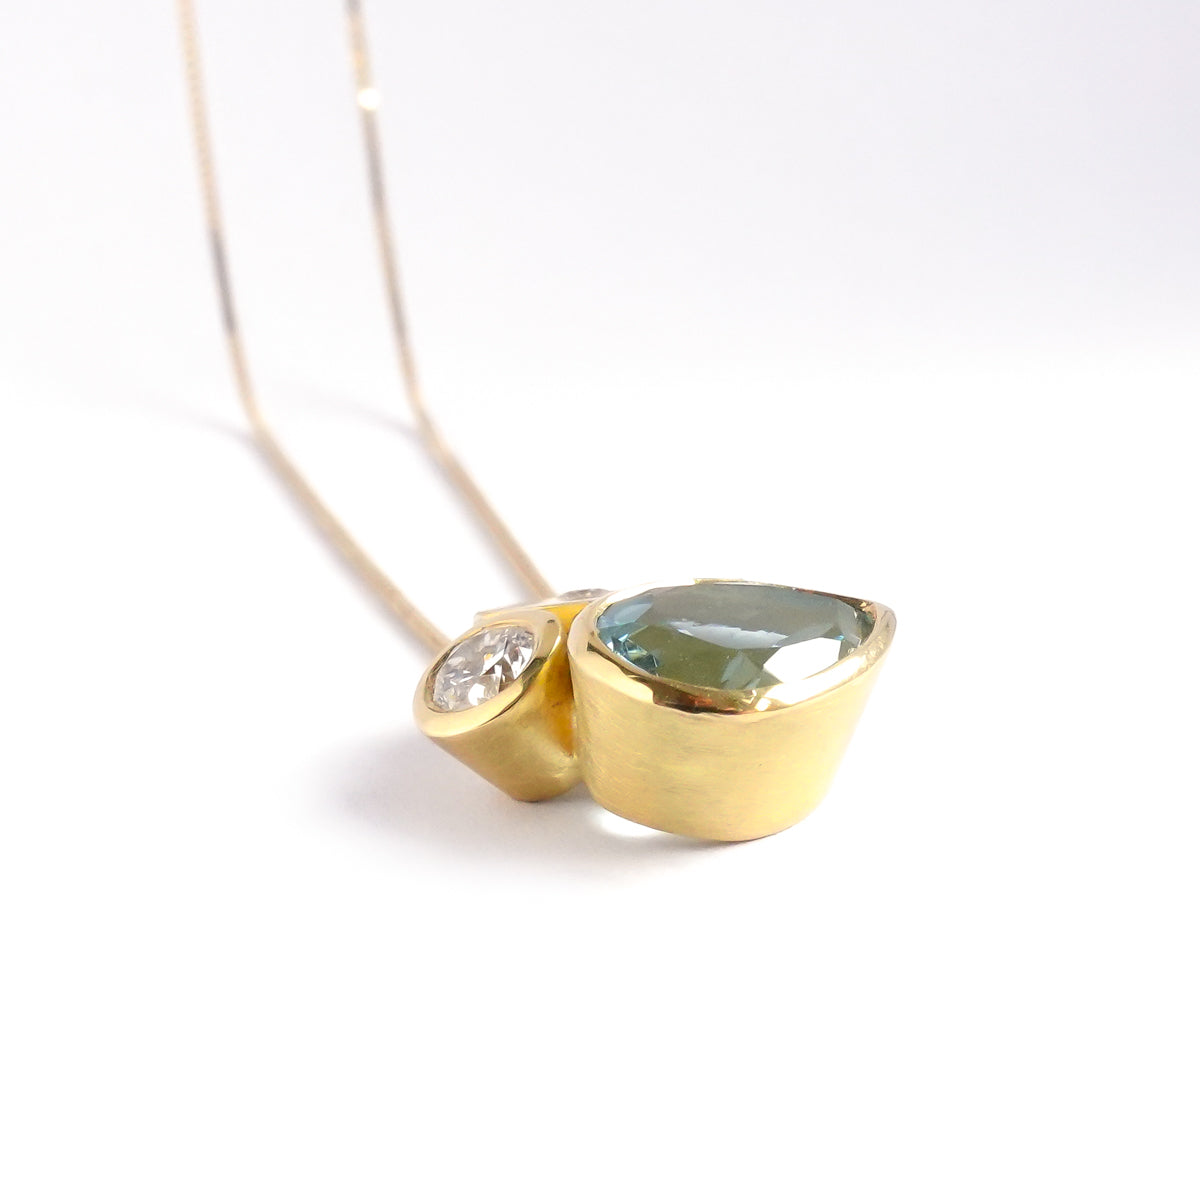 Contemporary modern unique 18ct gold diamond necklace aquamarine handmade by sue lane